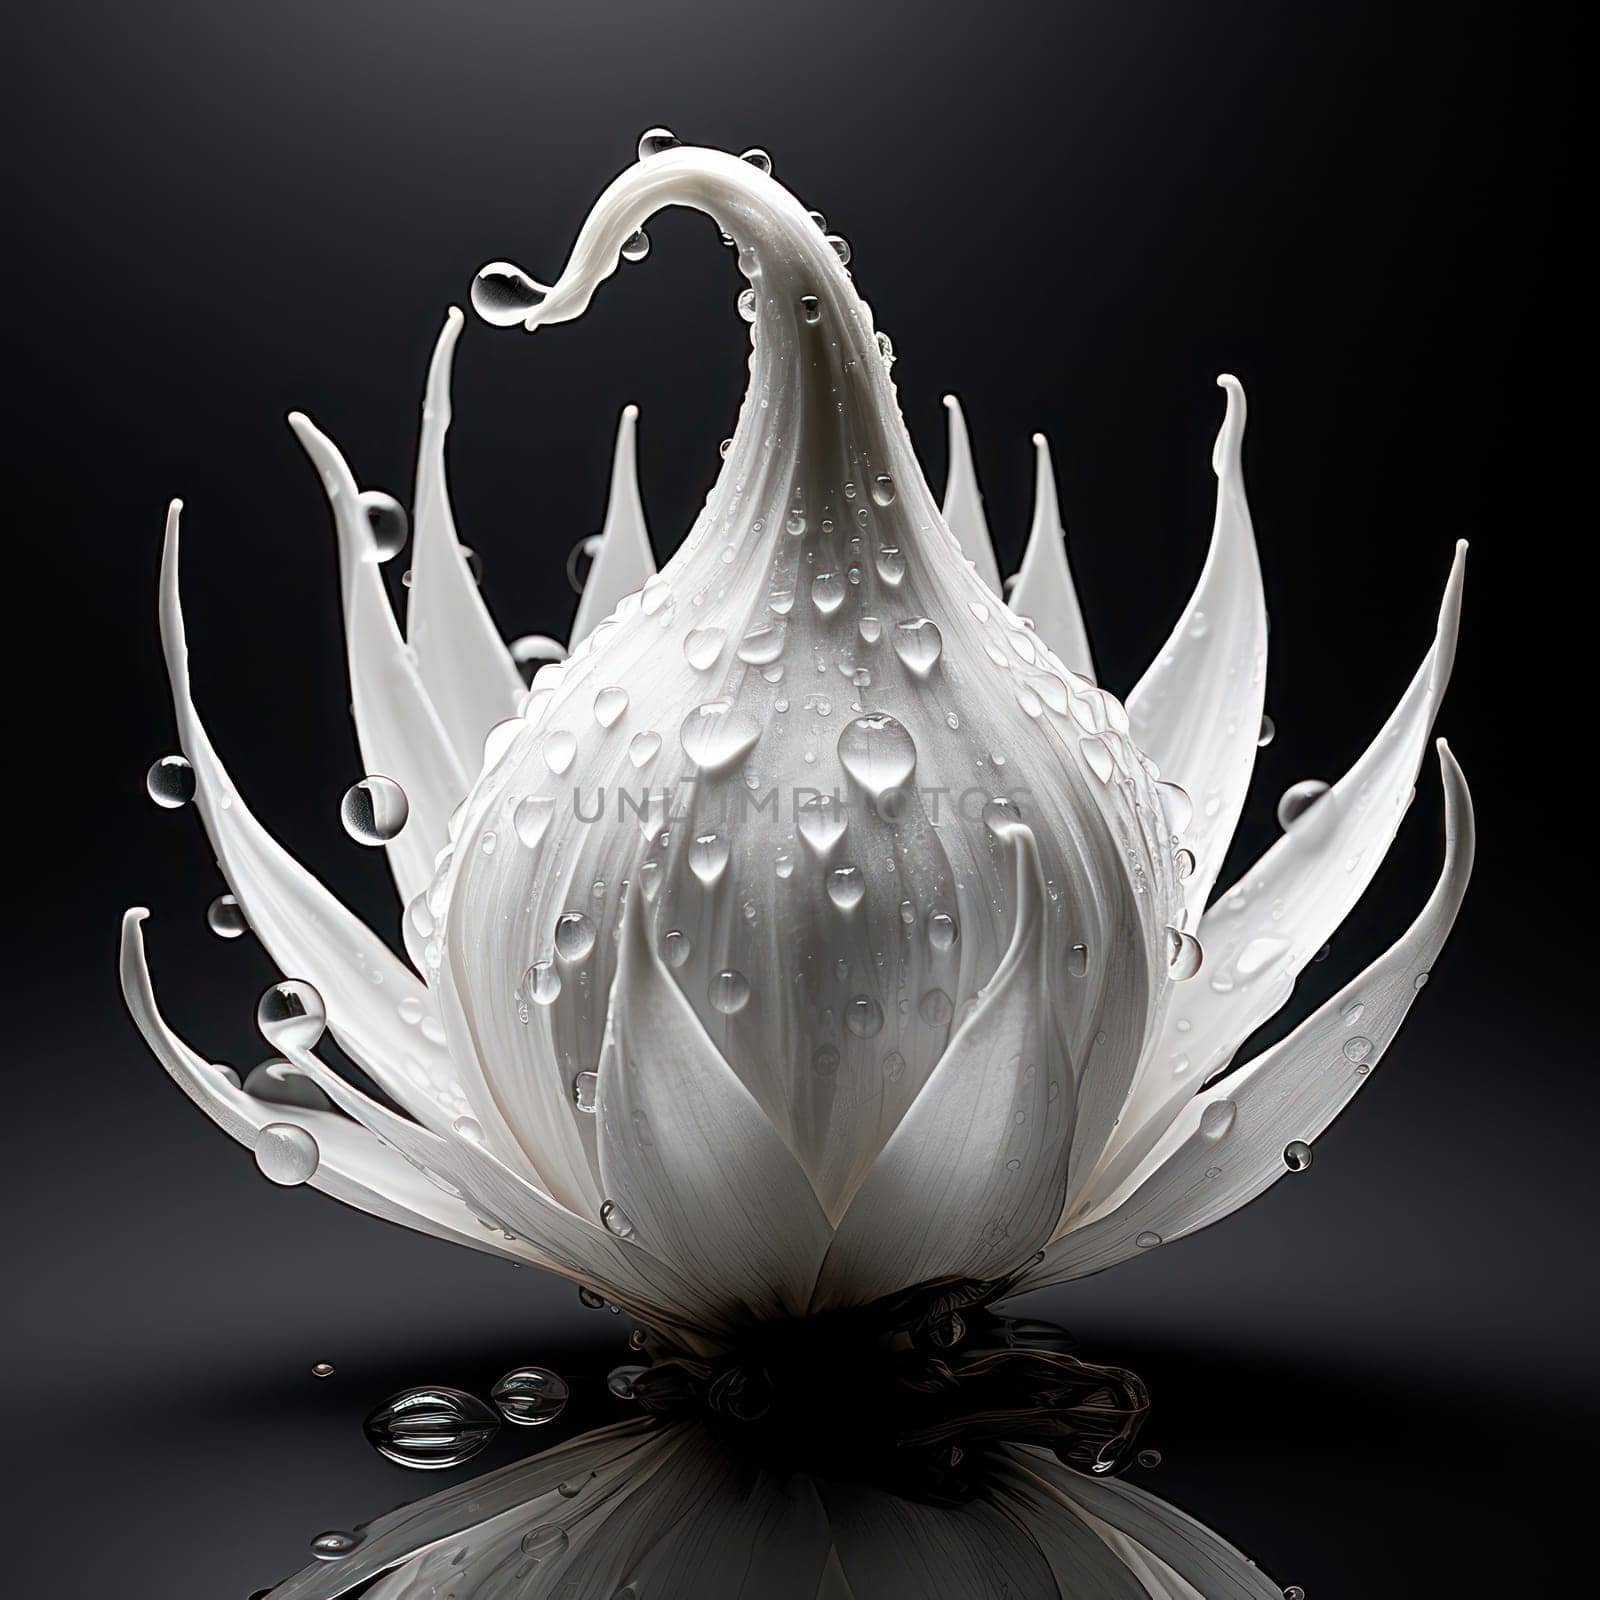 Pristine Beauty: White Lotus Blossom in a Serene Garden Oasis